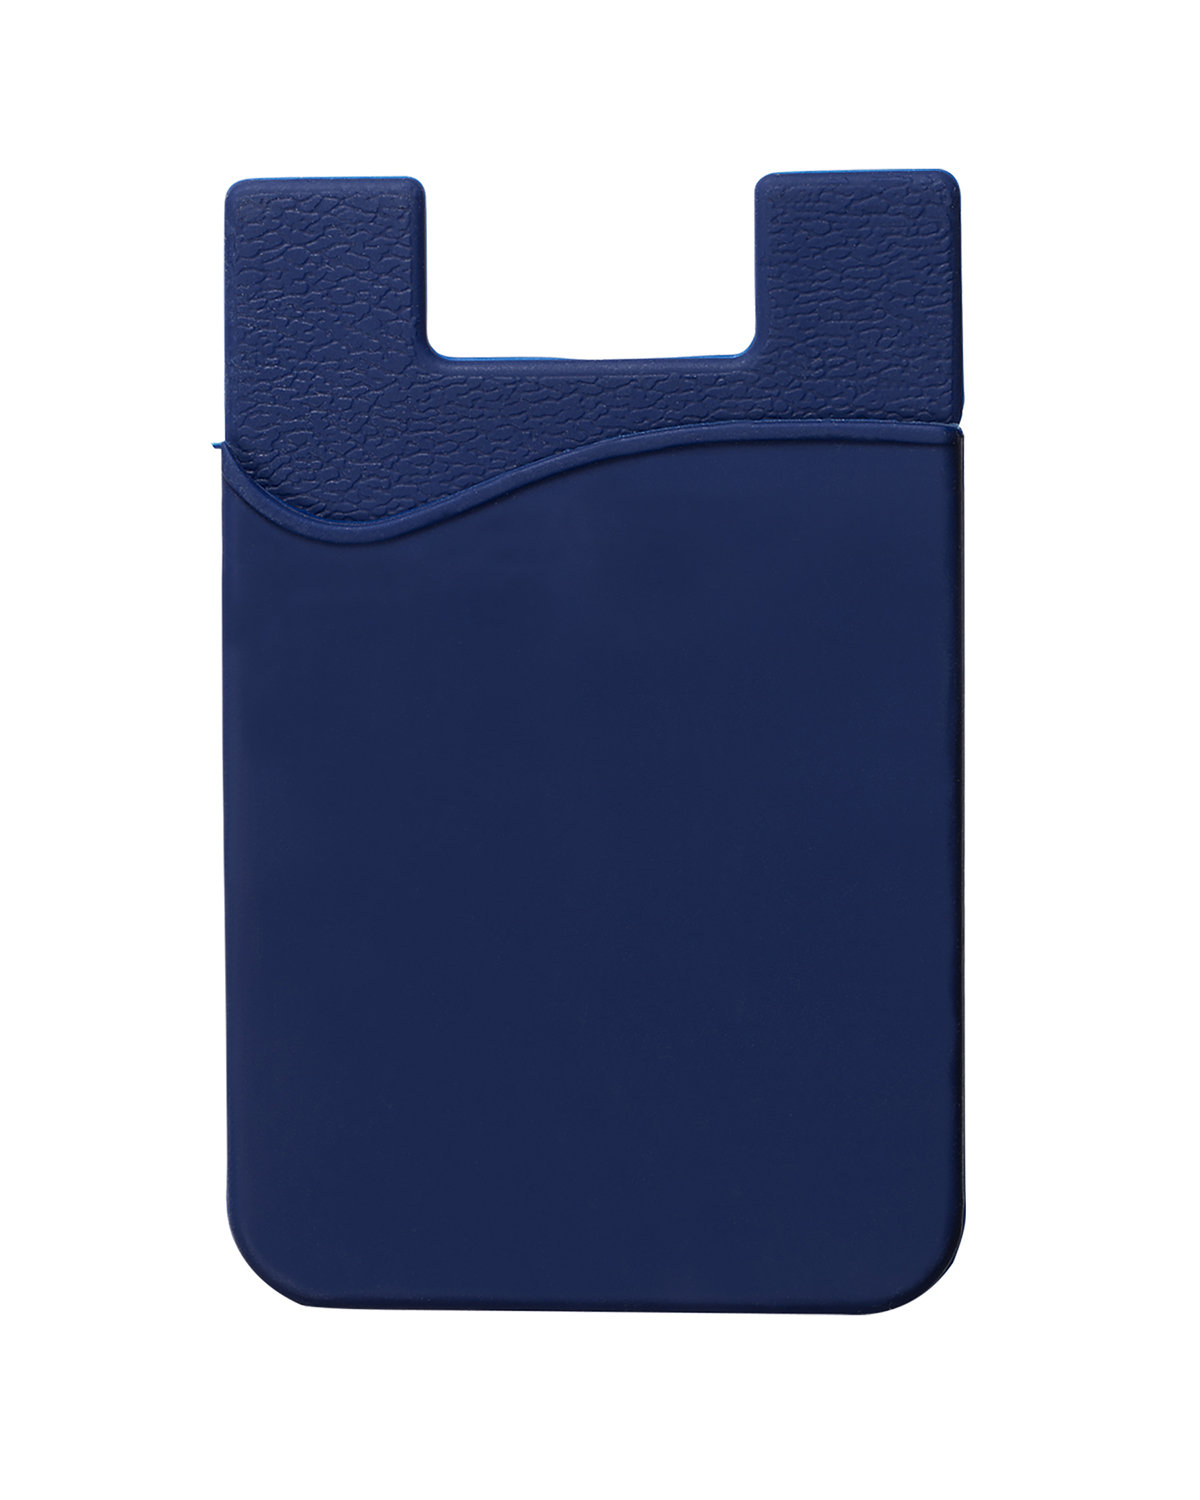 Prime Line Econo Silicone Mobile Device Pocket navy blue 